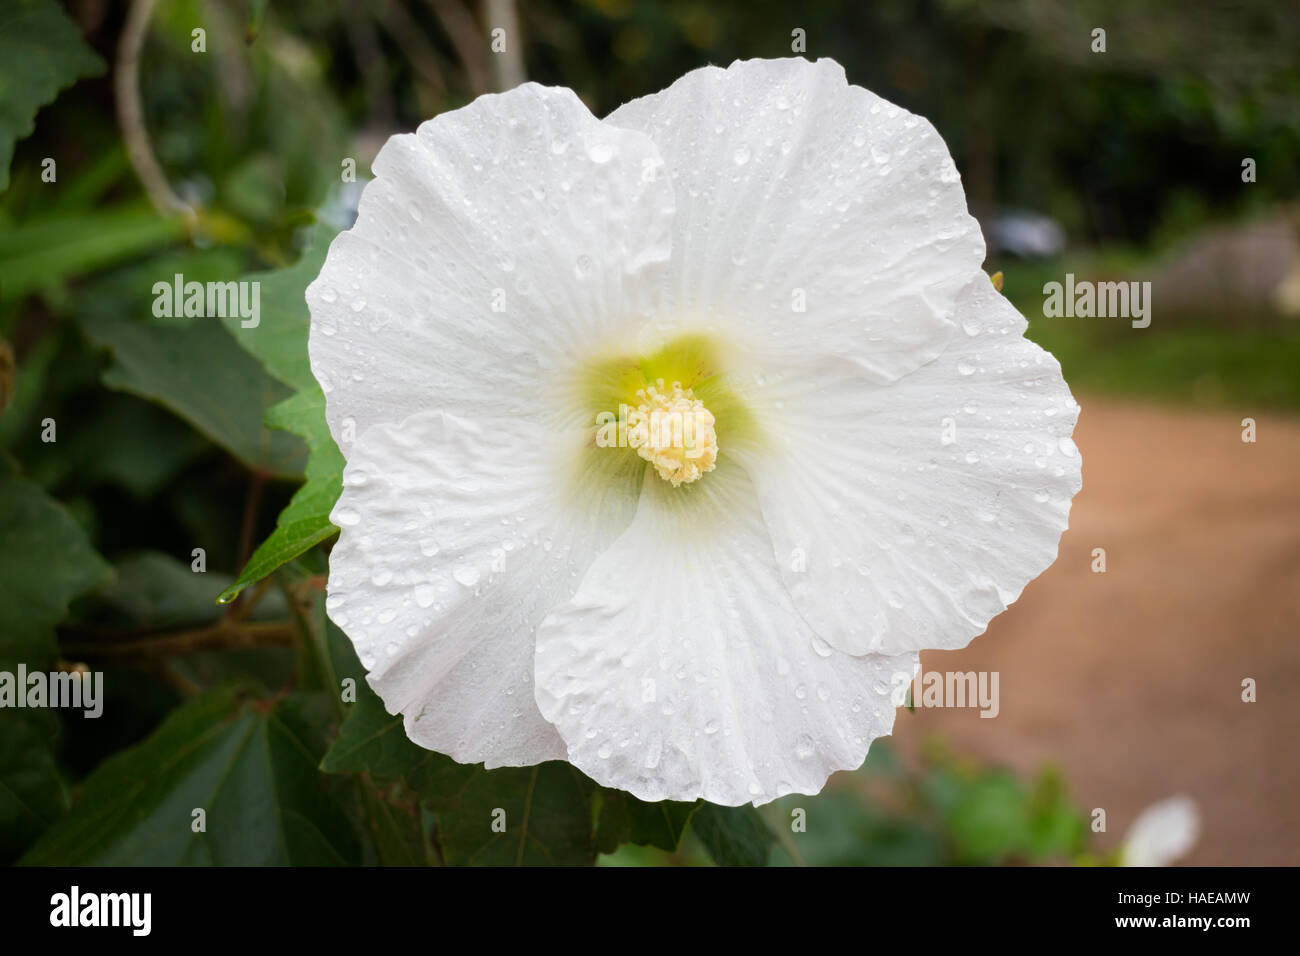 White hibiscus or shoe flower (chaba), stock photo Stock Photo